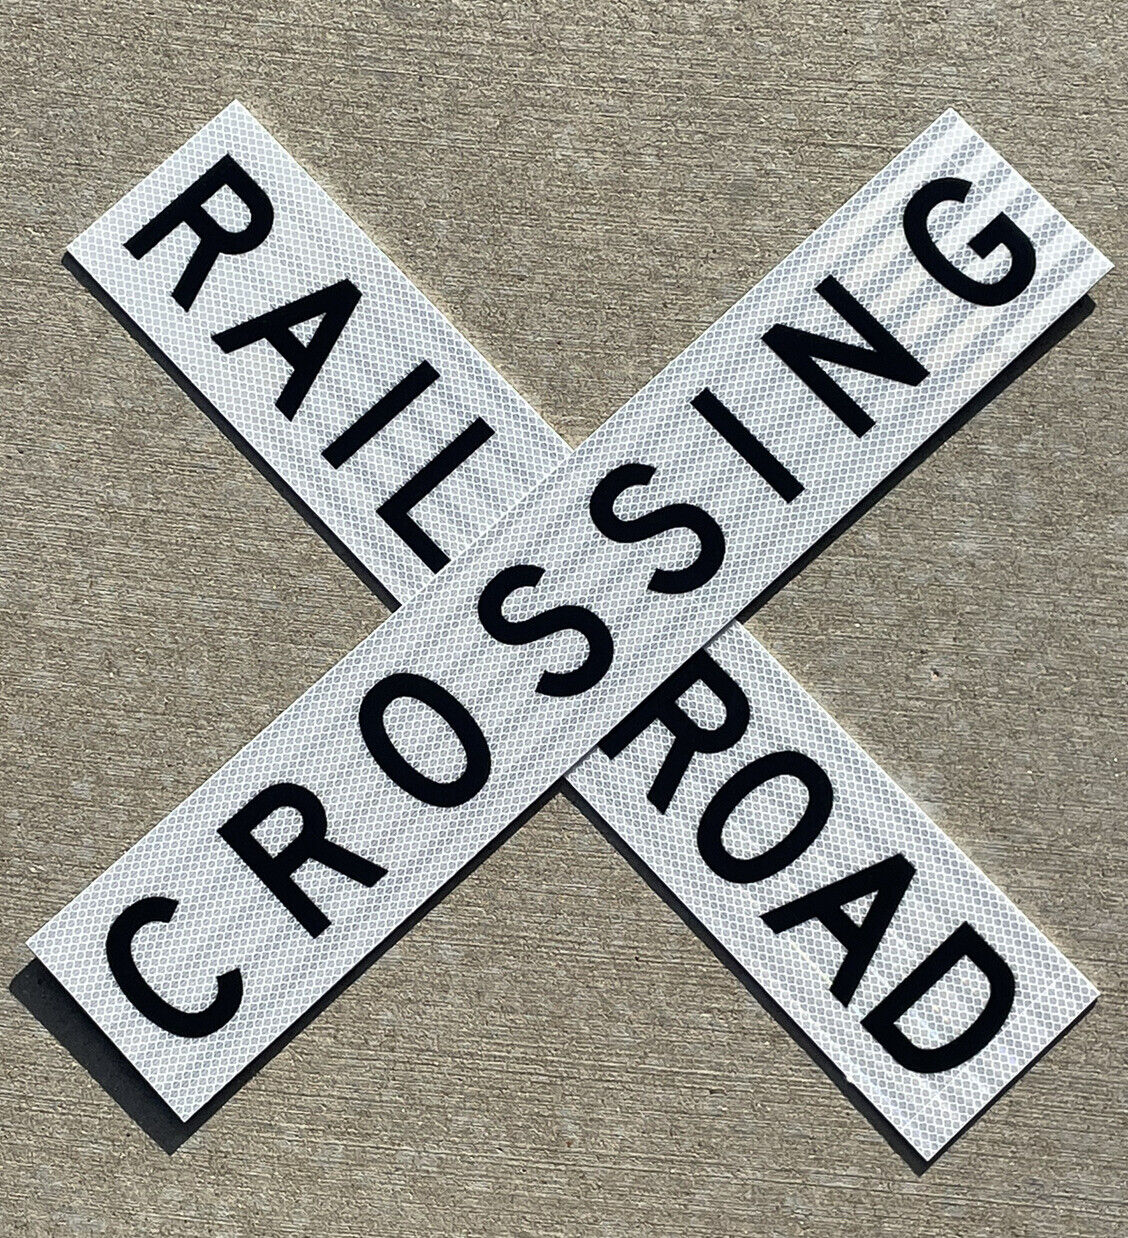 Railroad Crossing 24”x 24” Crossbuck Railway Train New Authentic Road Sign